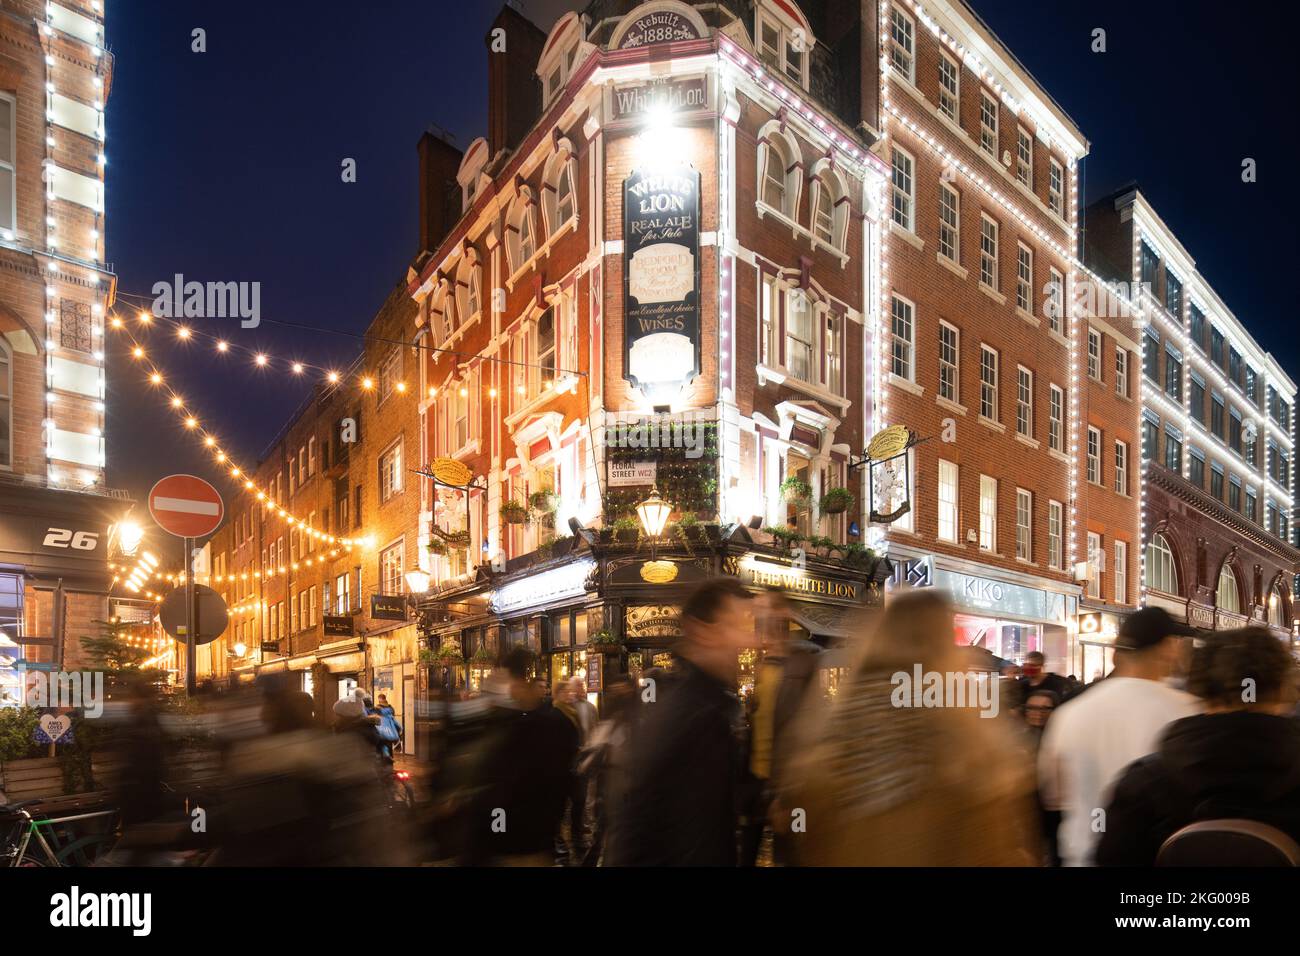 Covent Garden Christmas lights, London Stock Photo